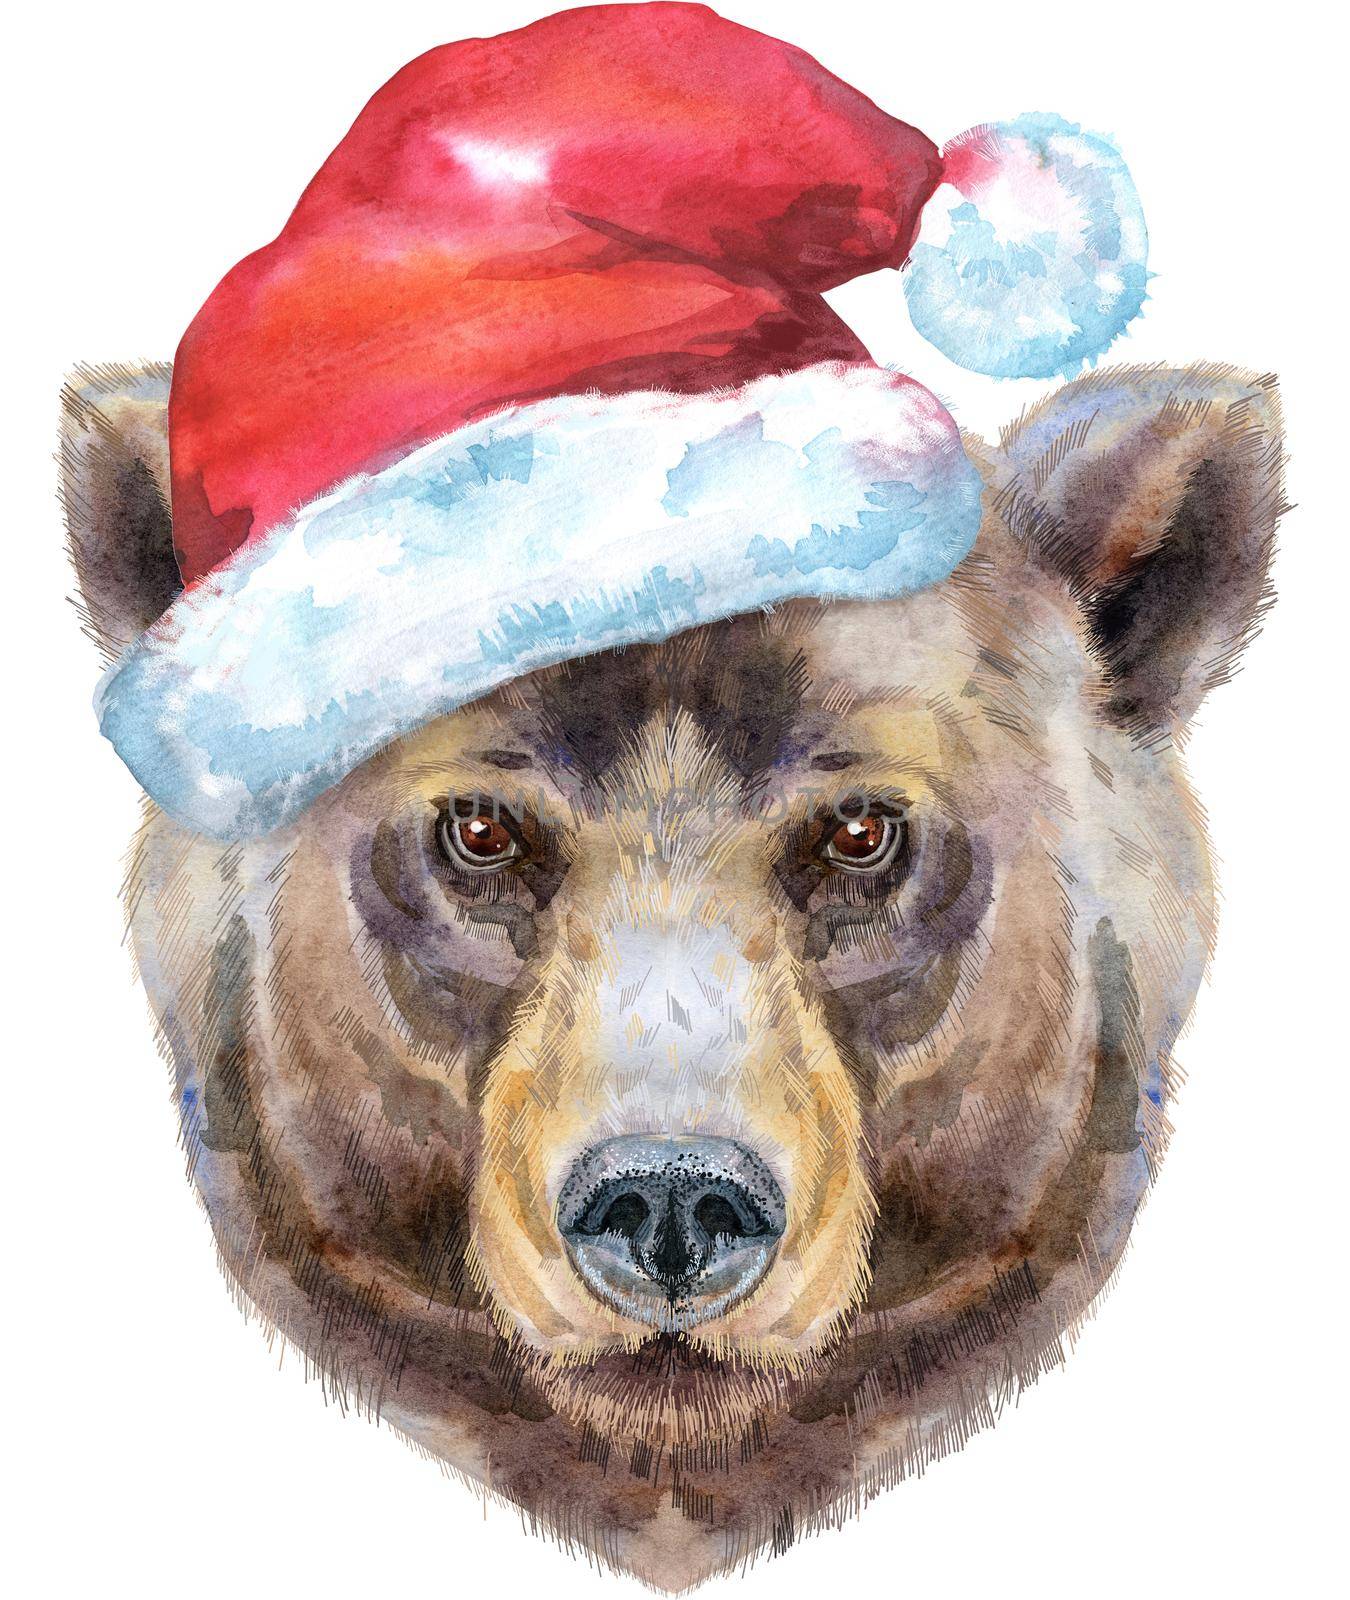 Bear portrait in Santa hat. Watercolor brown bear painting illustration. Beautiful wildlife world